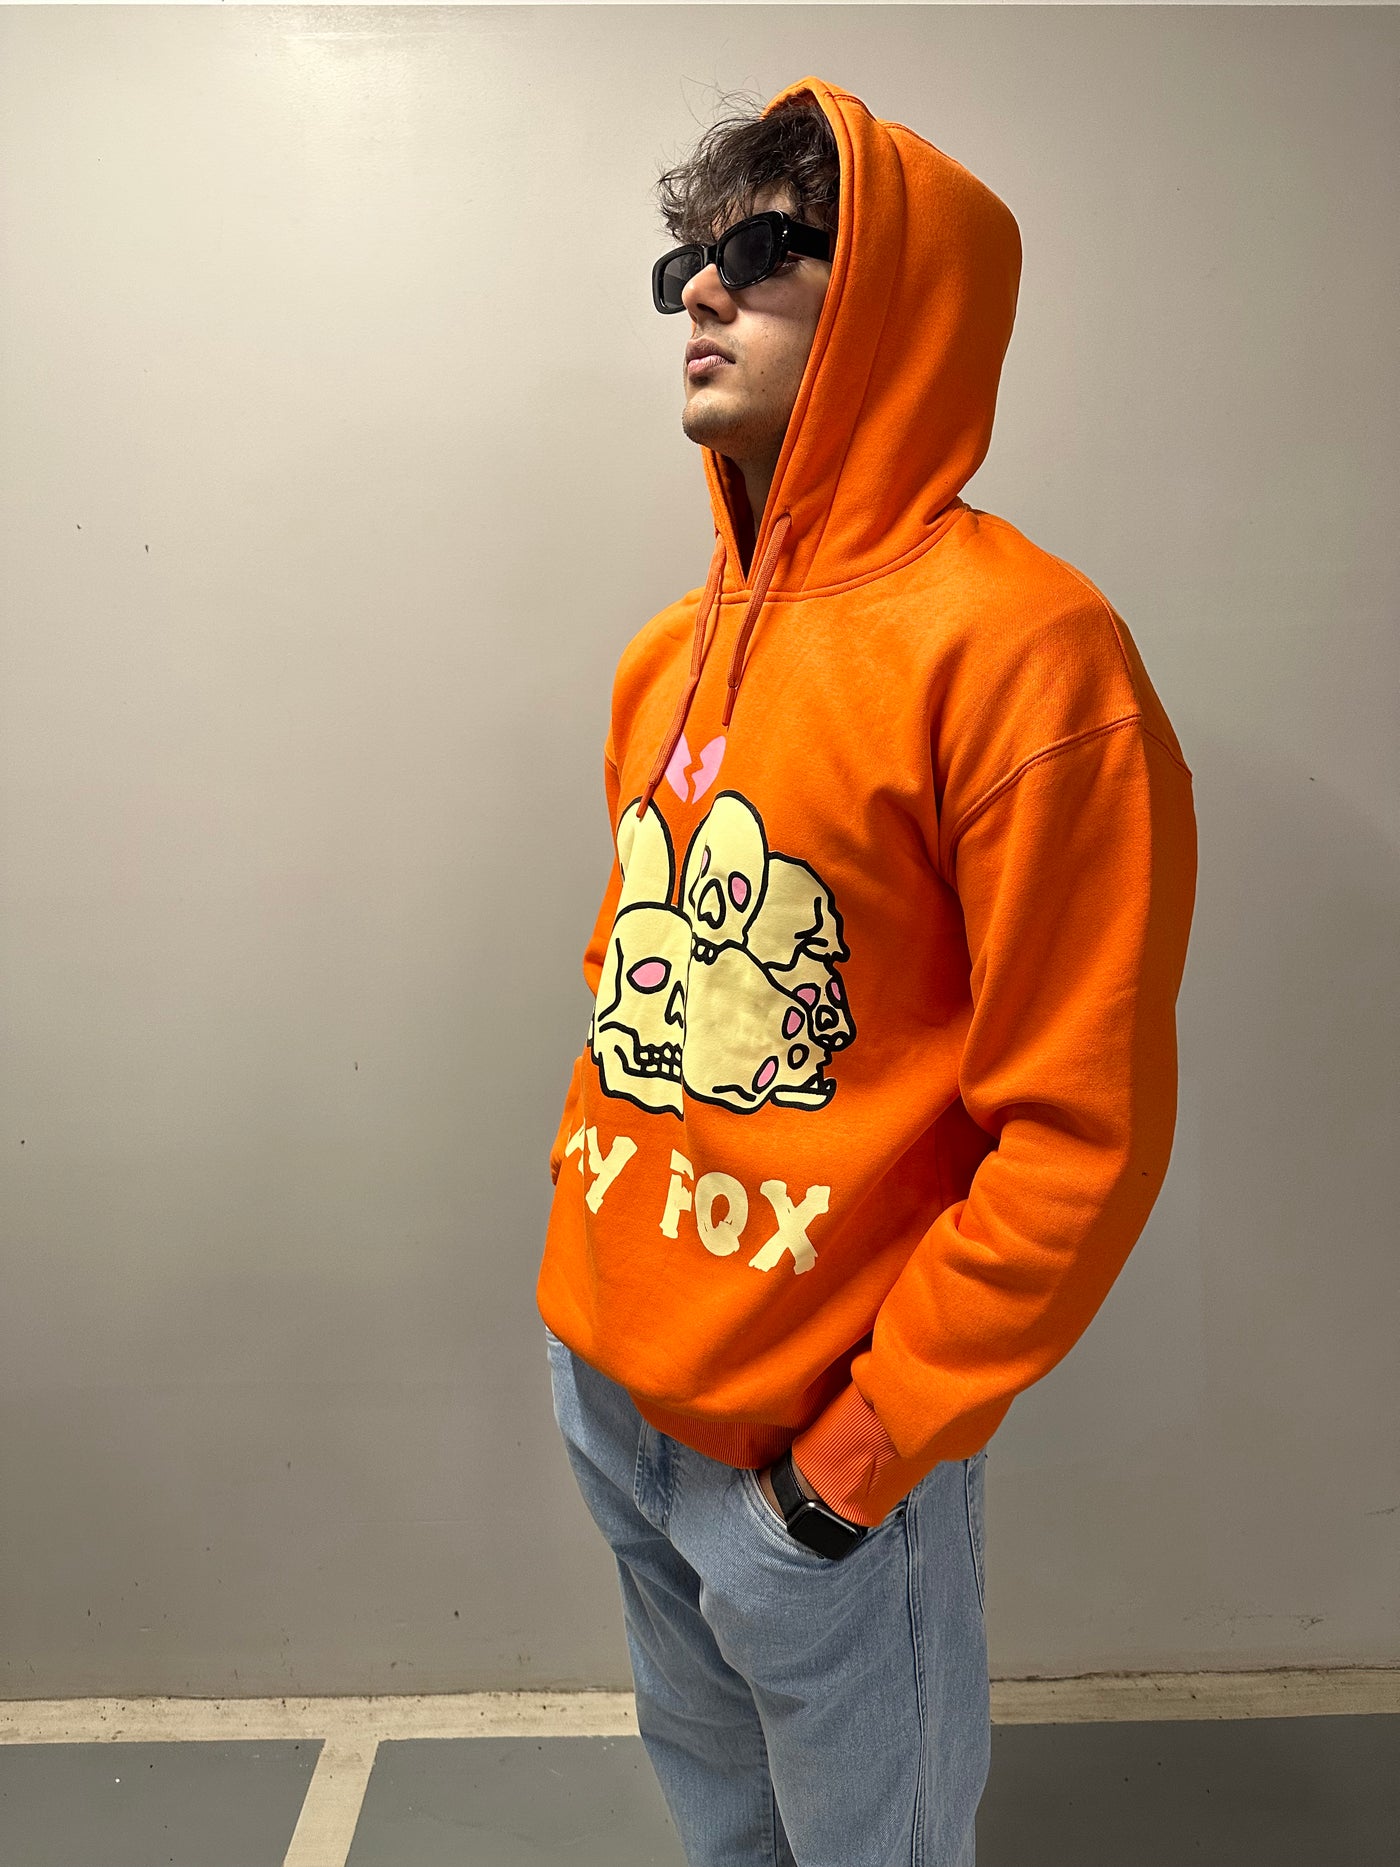 Lazyfox-Skull hoodie Orange